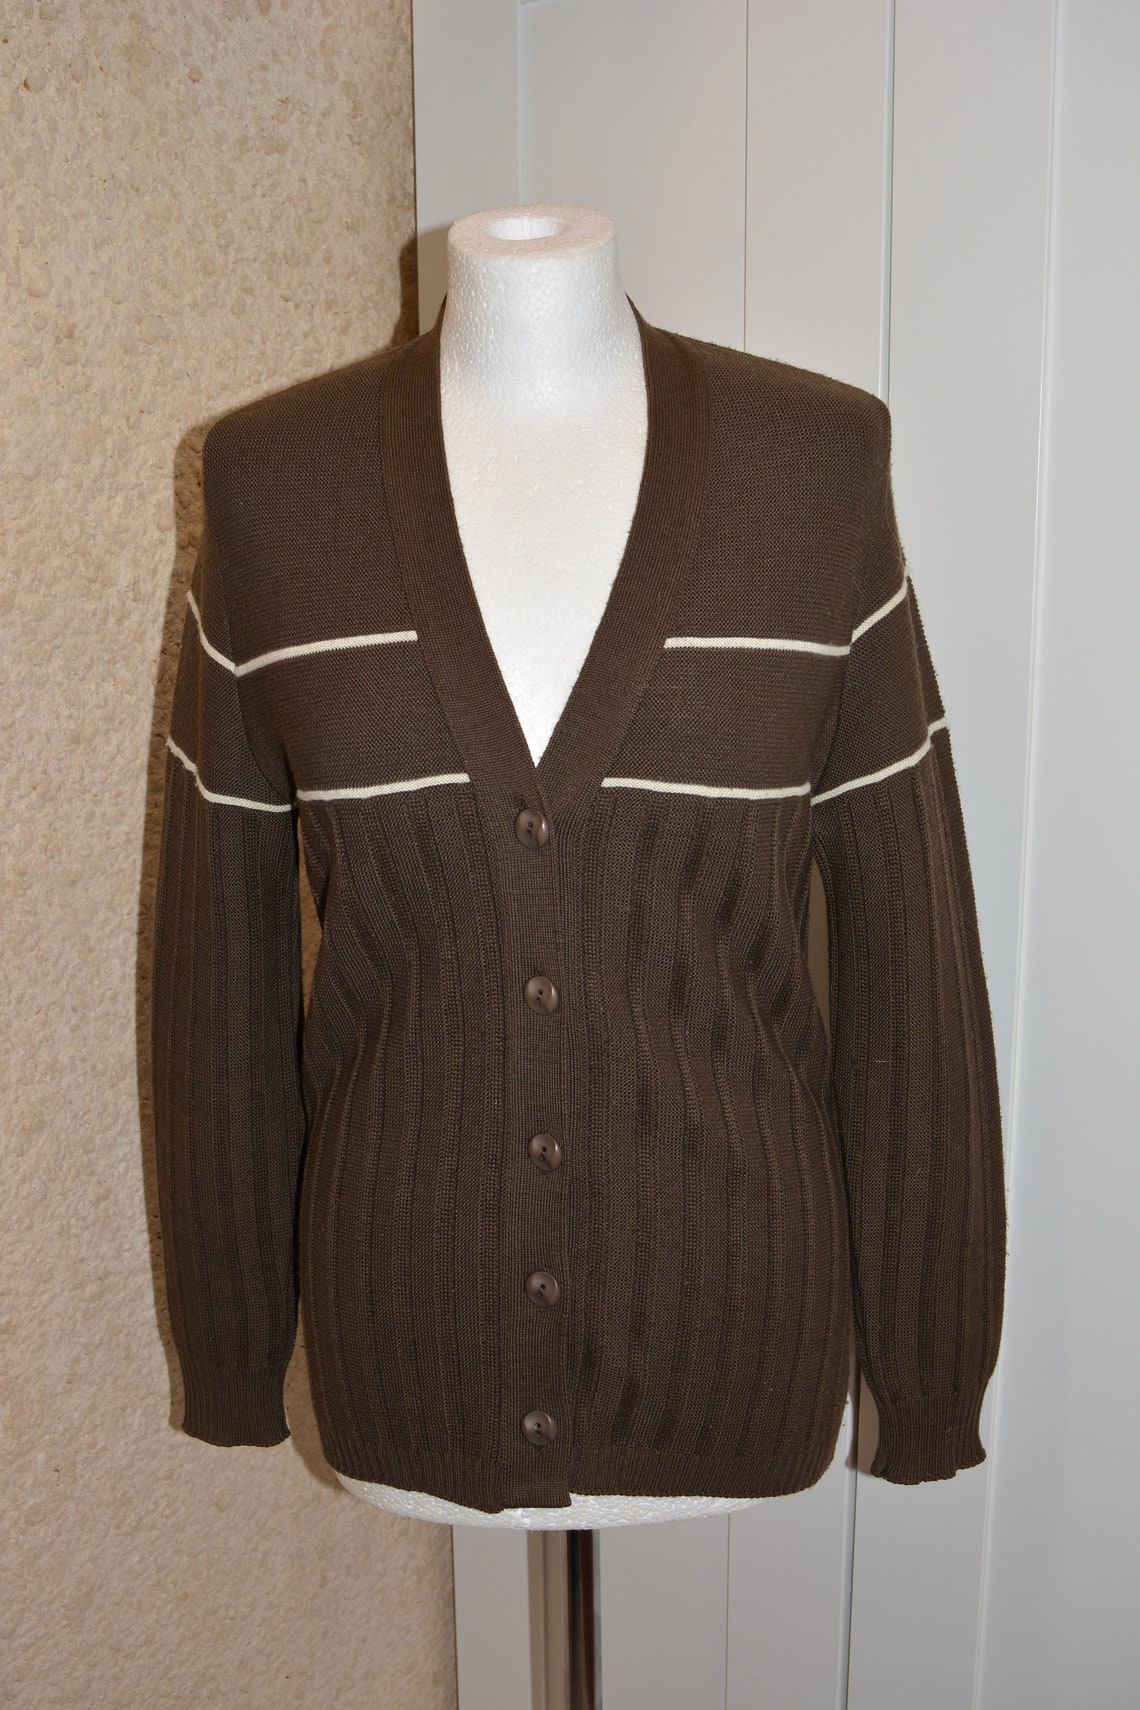 80's dark academia sweater Wool blend vintage cardigan | Etsy